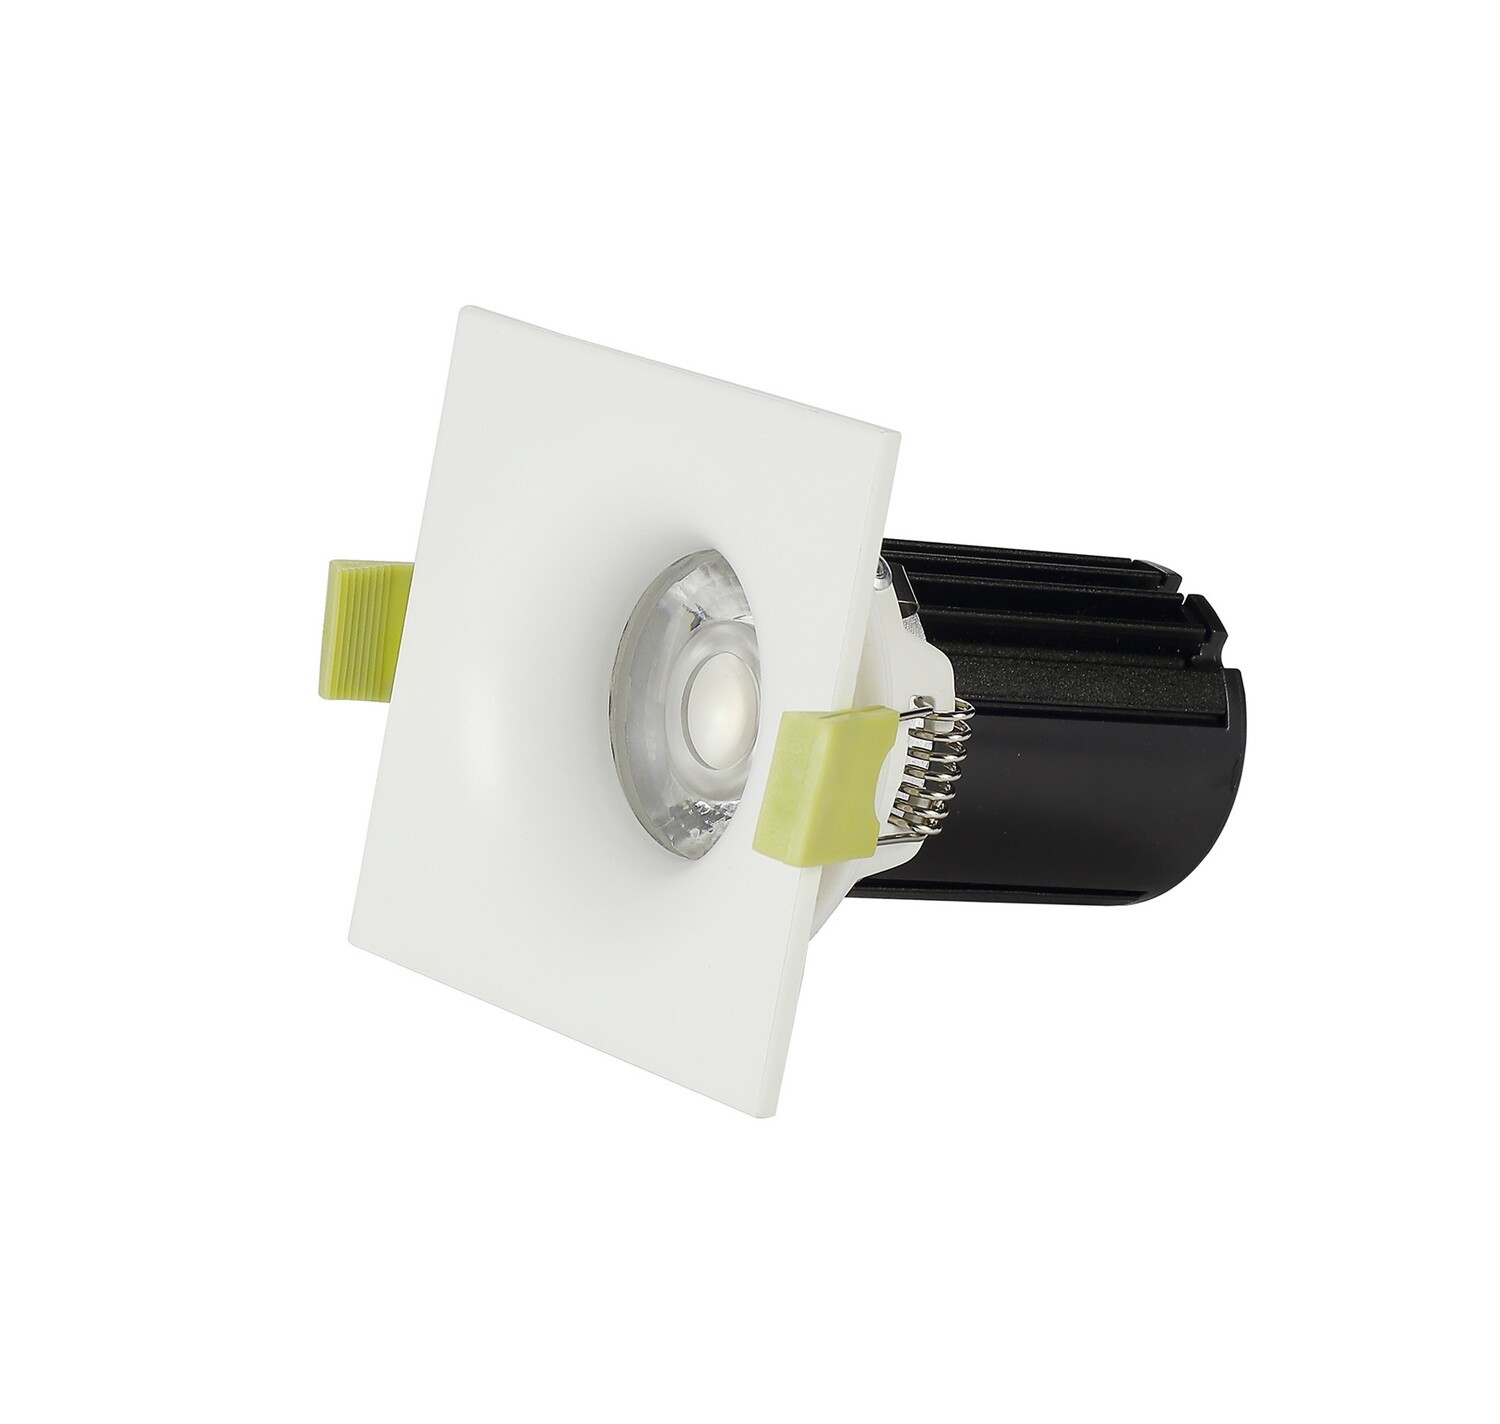 BRUVE square LED Spot-light 10W 810lm White IP65